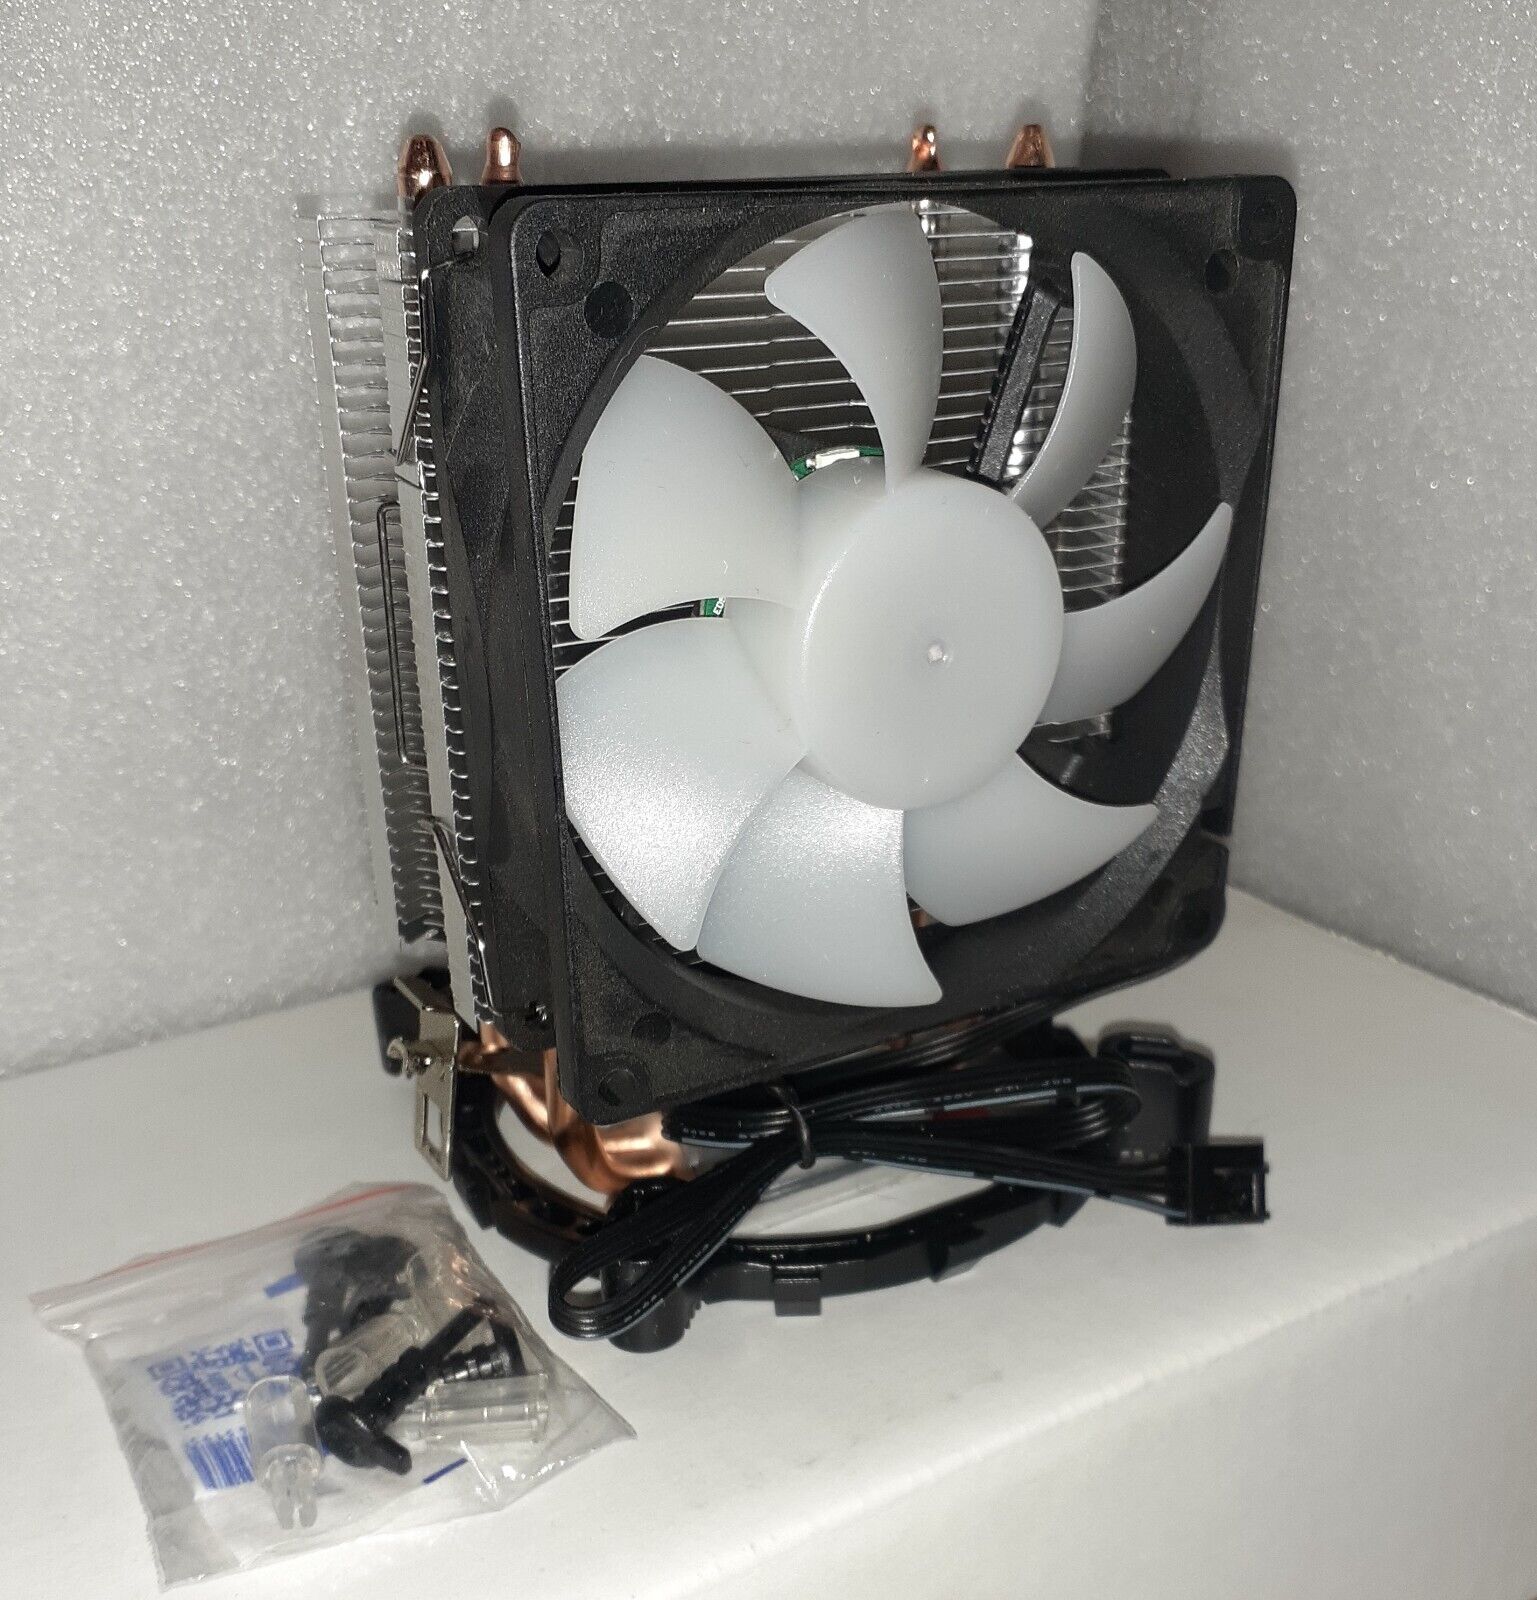 CPU Cooler - 90mm RGB Heatsink Fan for AMD and Intel CPU's